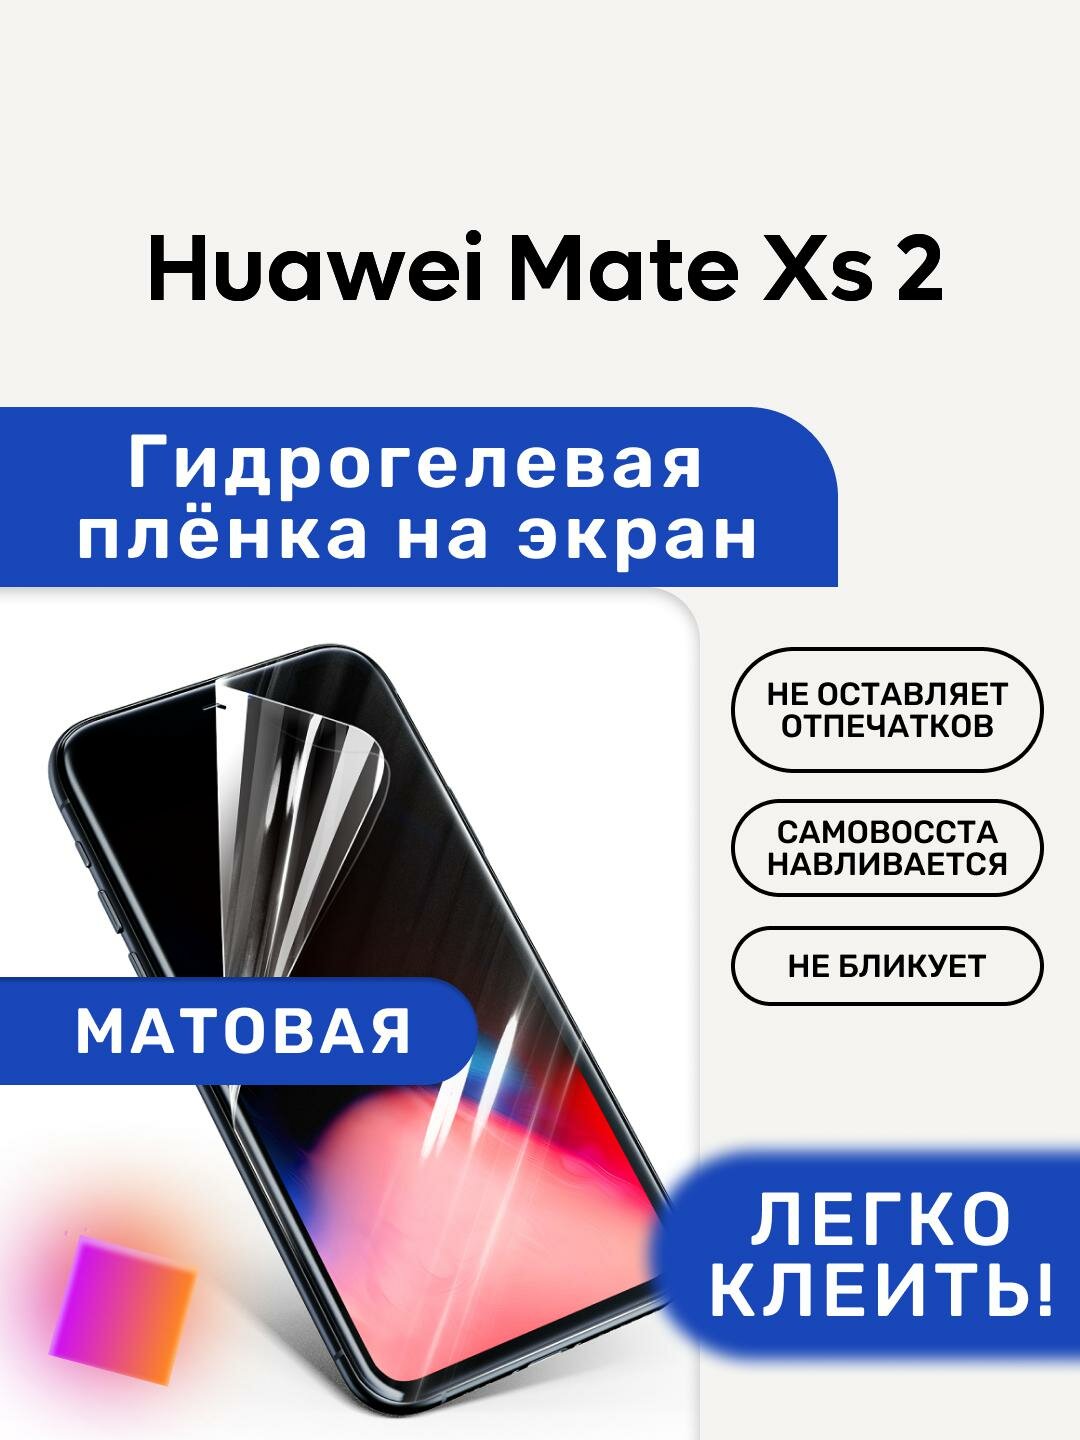 Матовая Гидрогелевая плёнка, полиуретановая, защита экрана Huawei Mate Xs 2